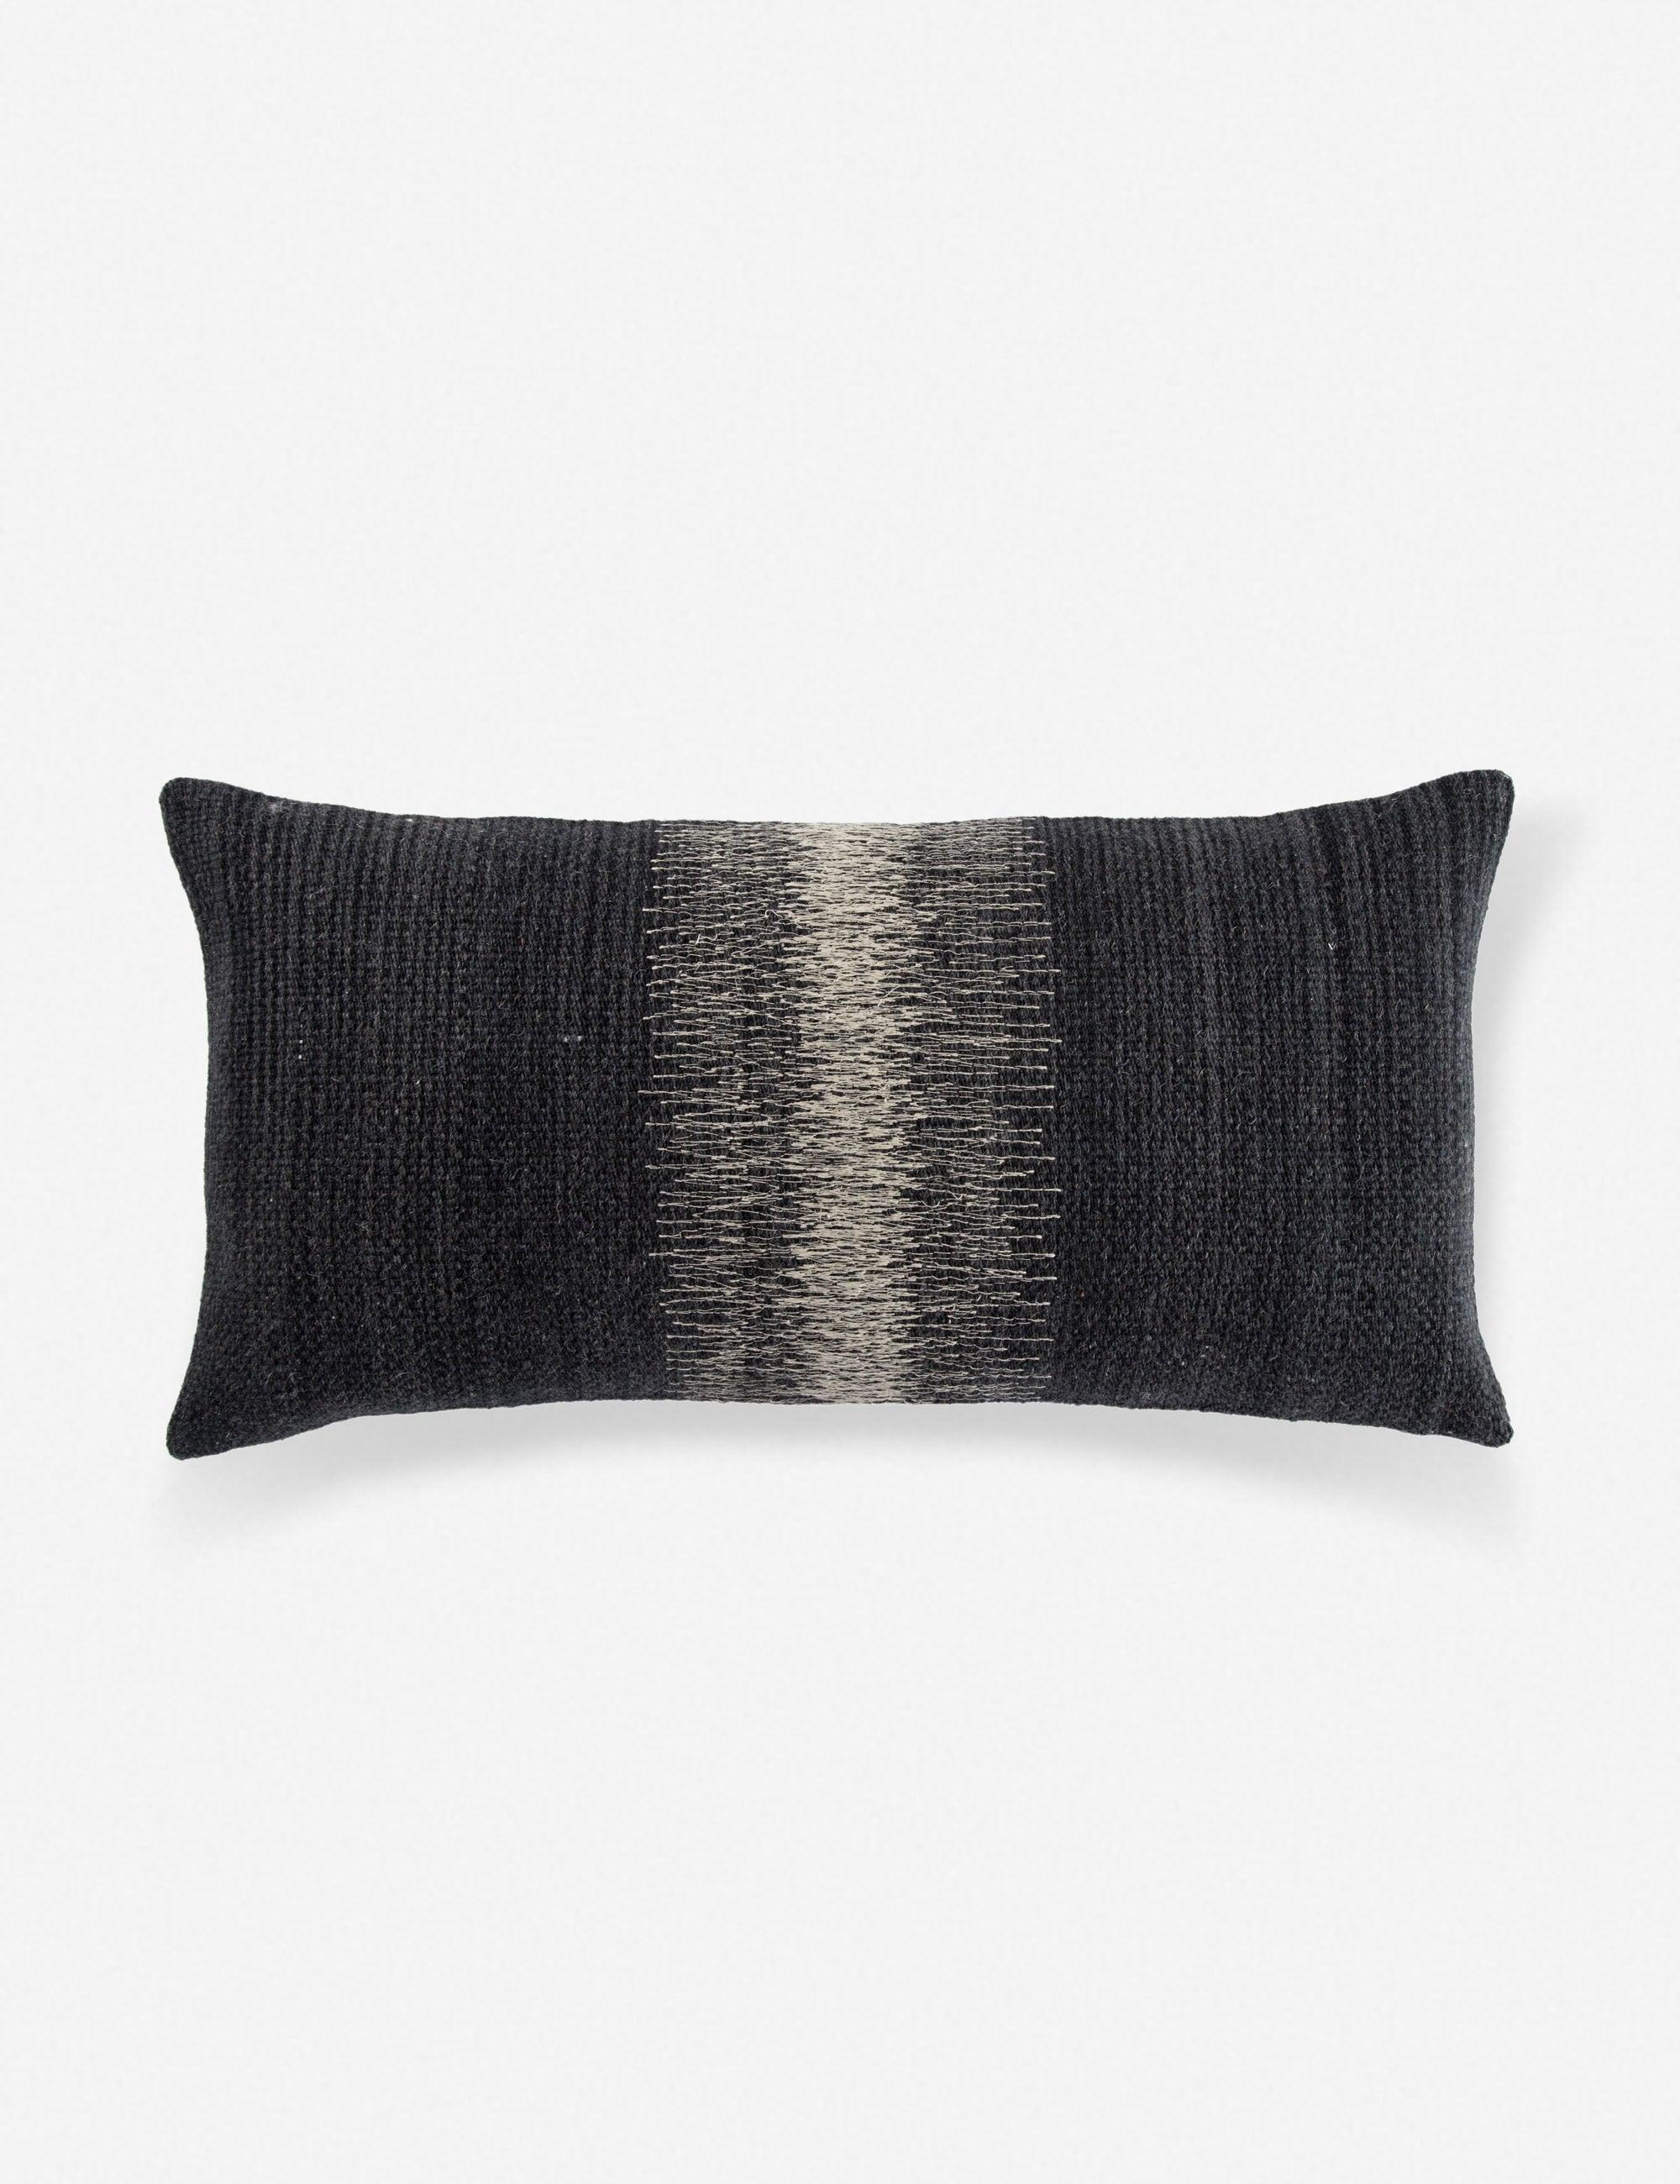 Aravalli Ombre Black and Gray Wool Lumbar Pillow